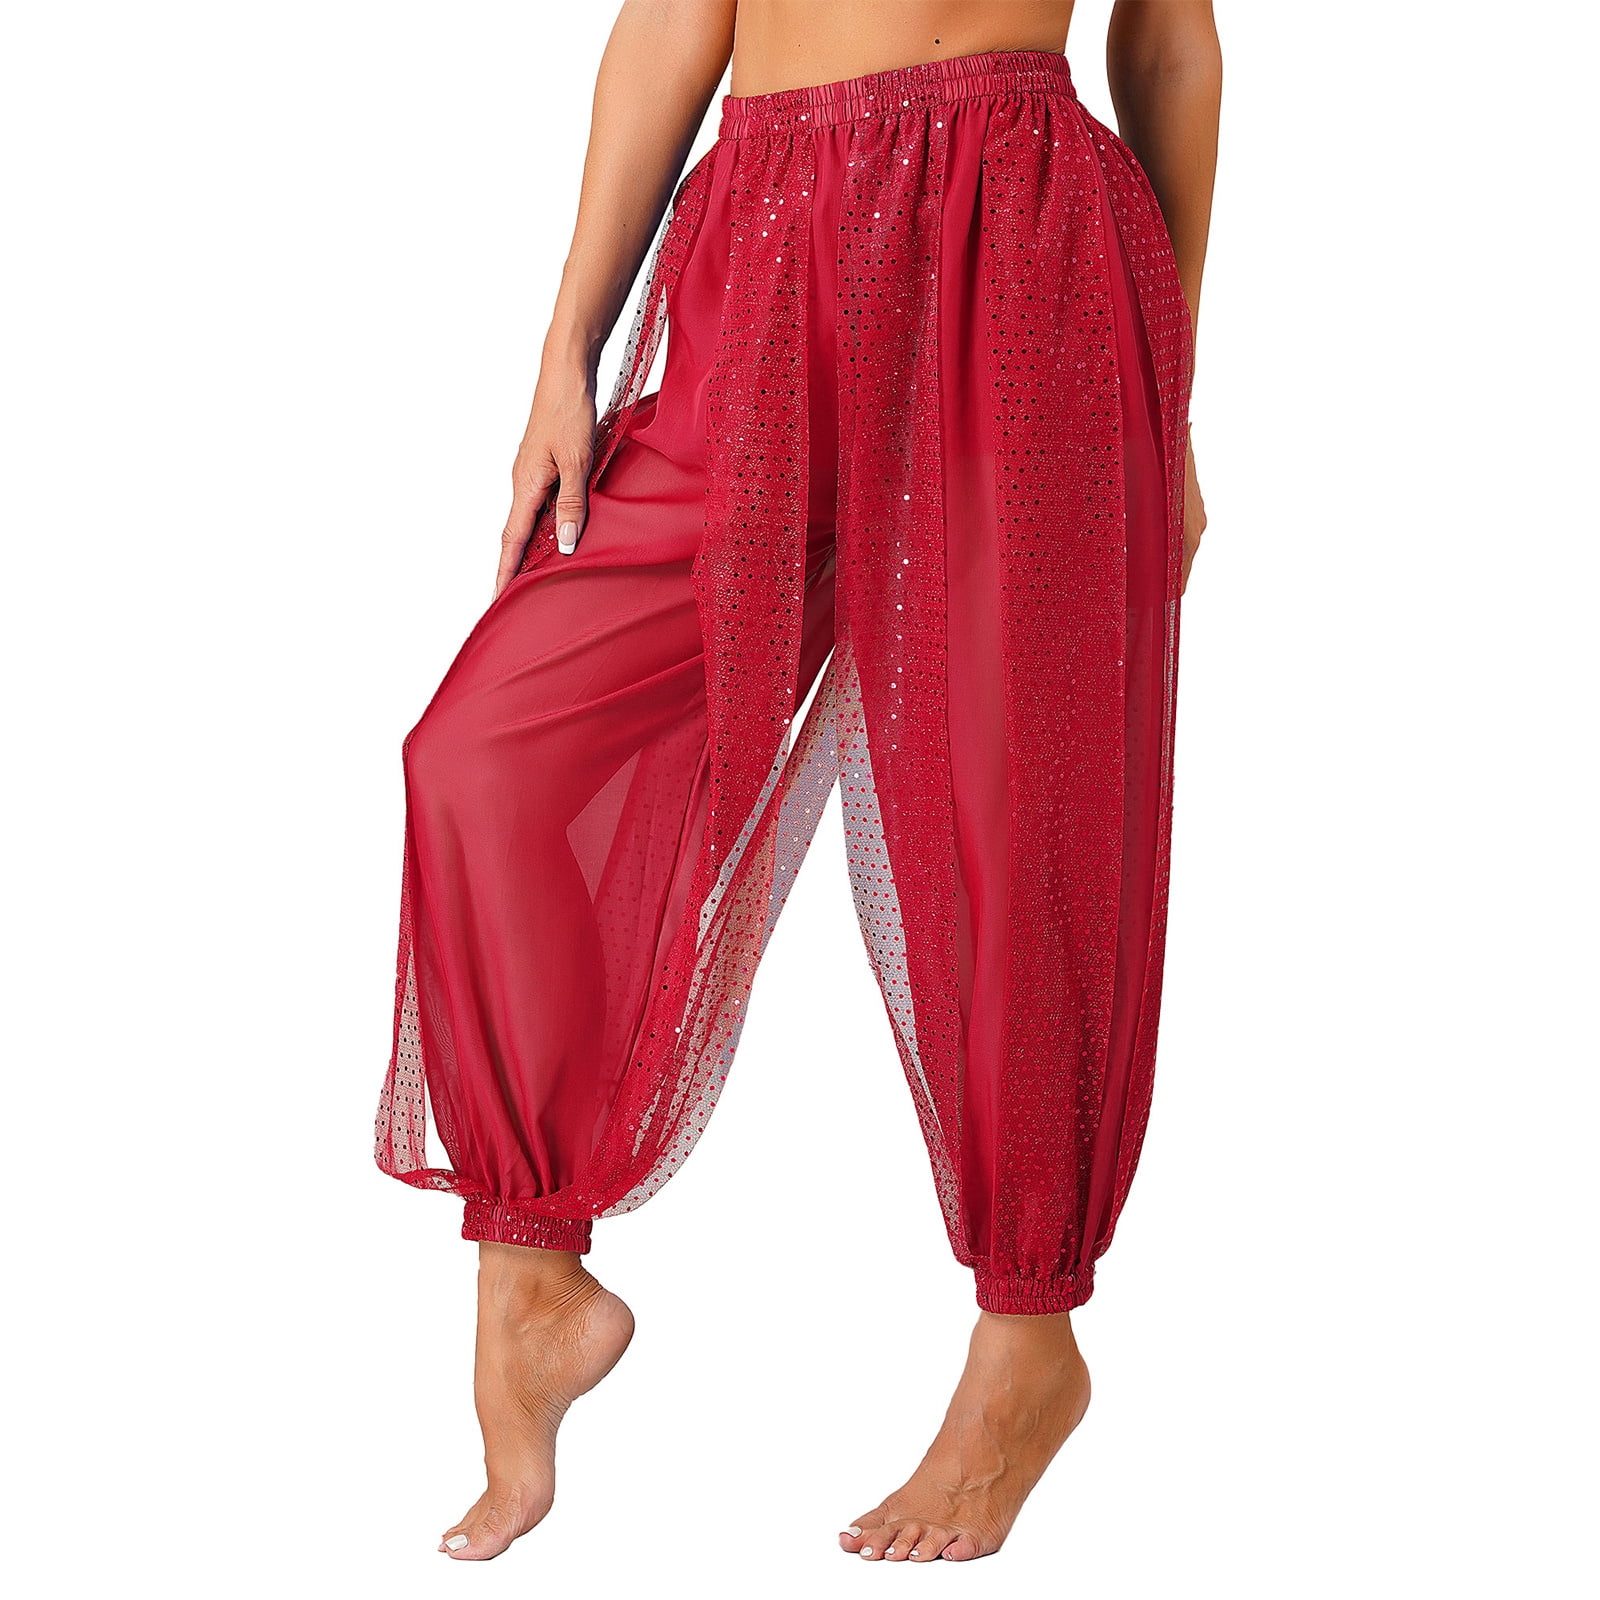 YONGHS Women's Belly Dance Costume Sequin Harem Lantern Pants